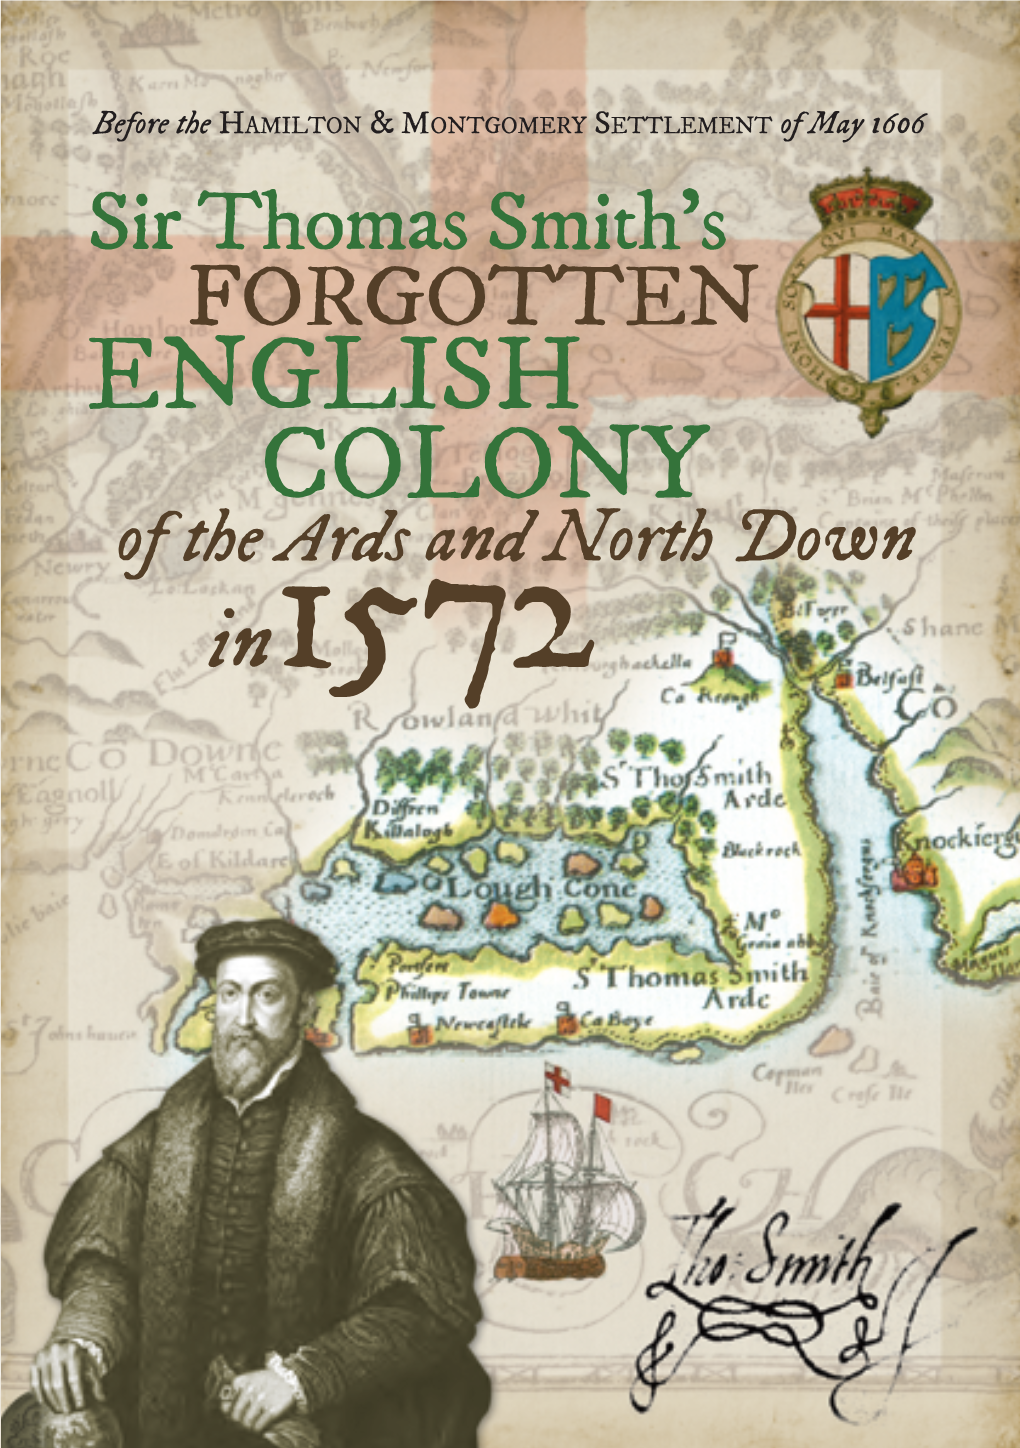 Sir Thomas Smith's English Colony 1572